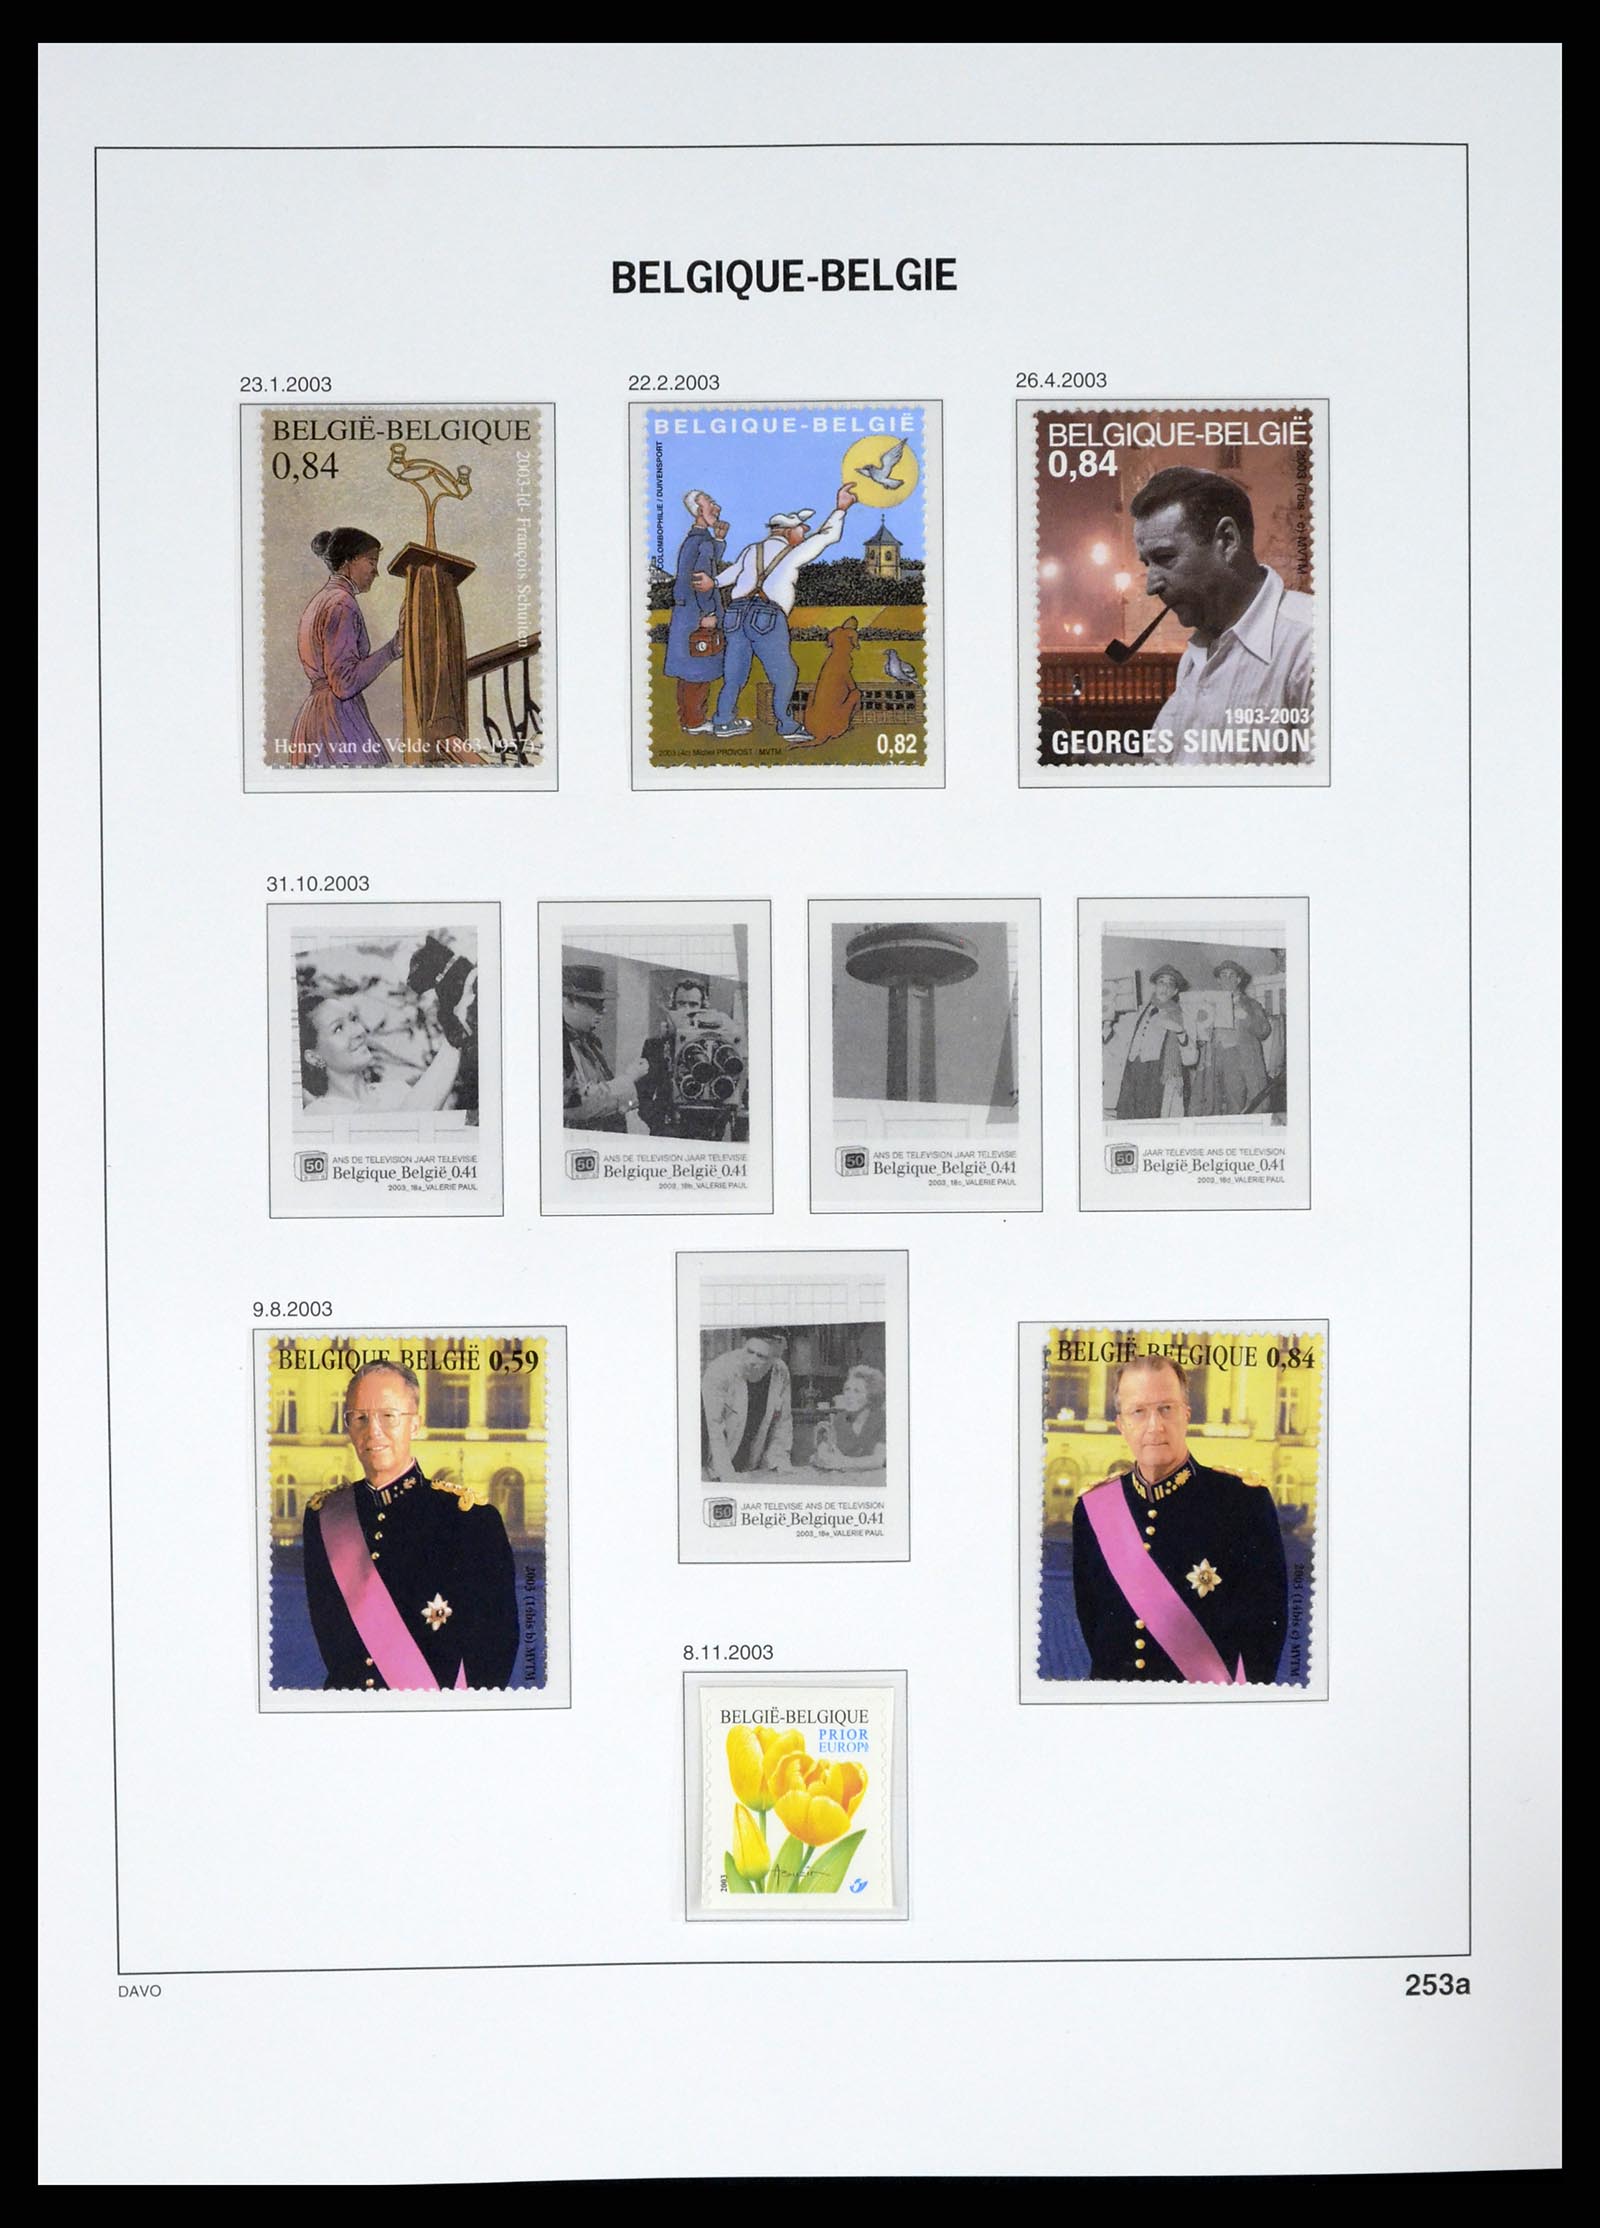 37368 205 - Stamp collection 37368 Belgium 1969-2003.